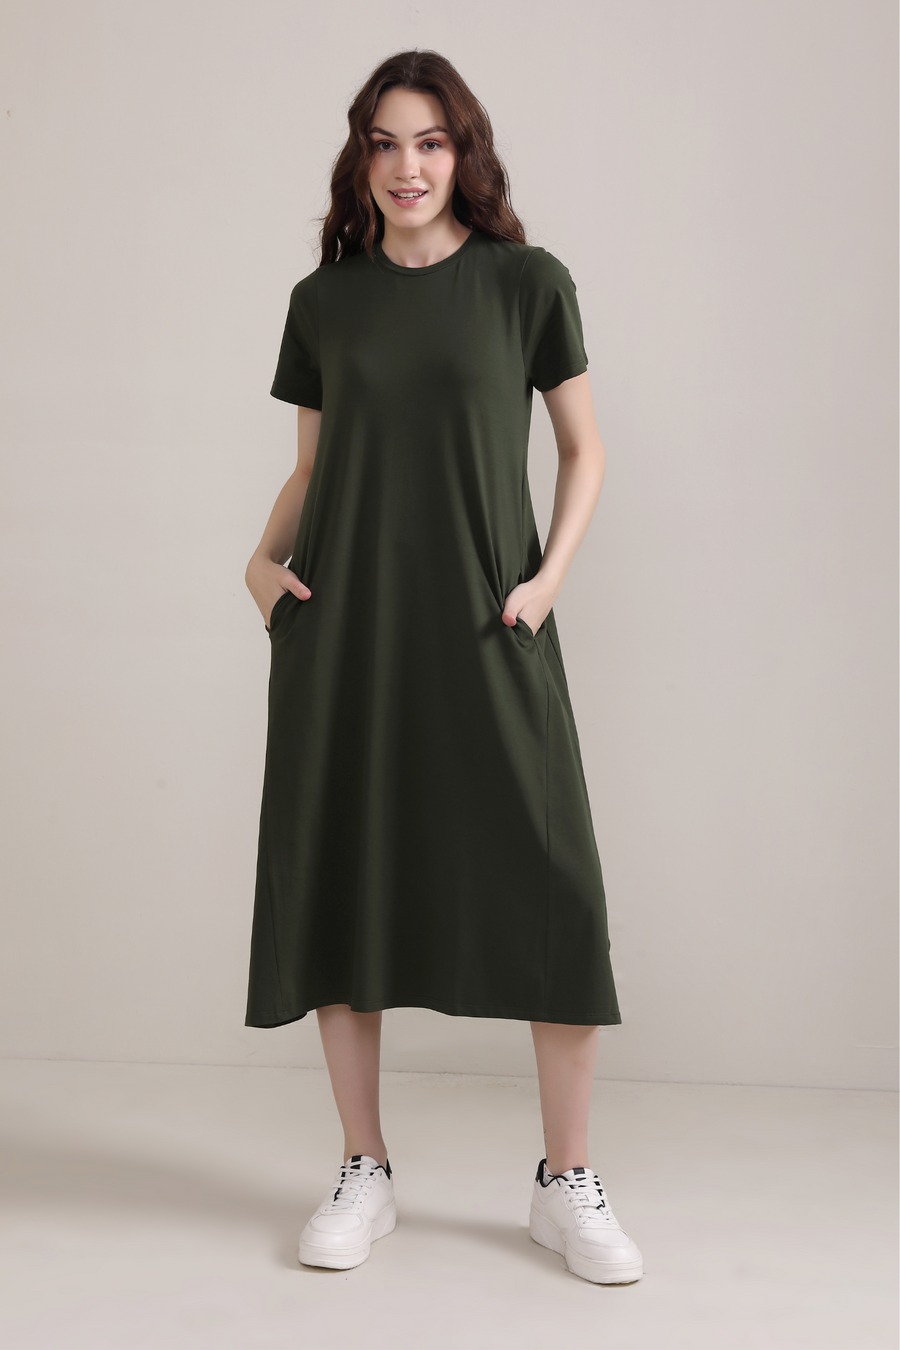 Cotton A line Short Sleeve Dress-Olive